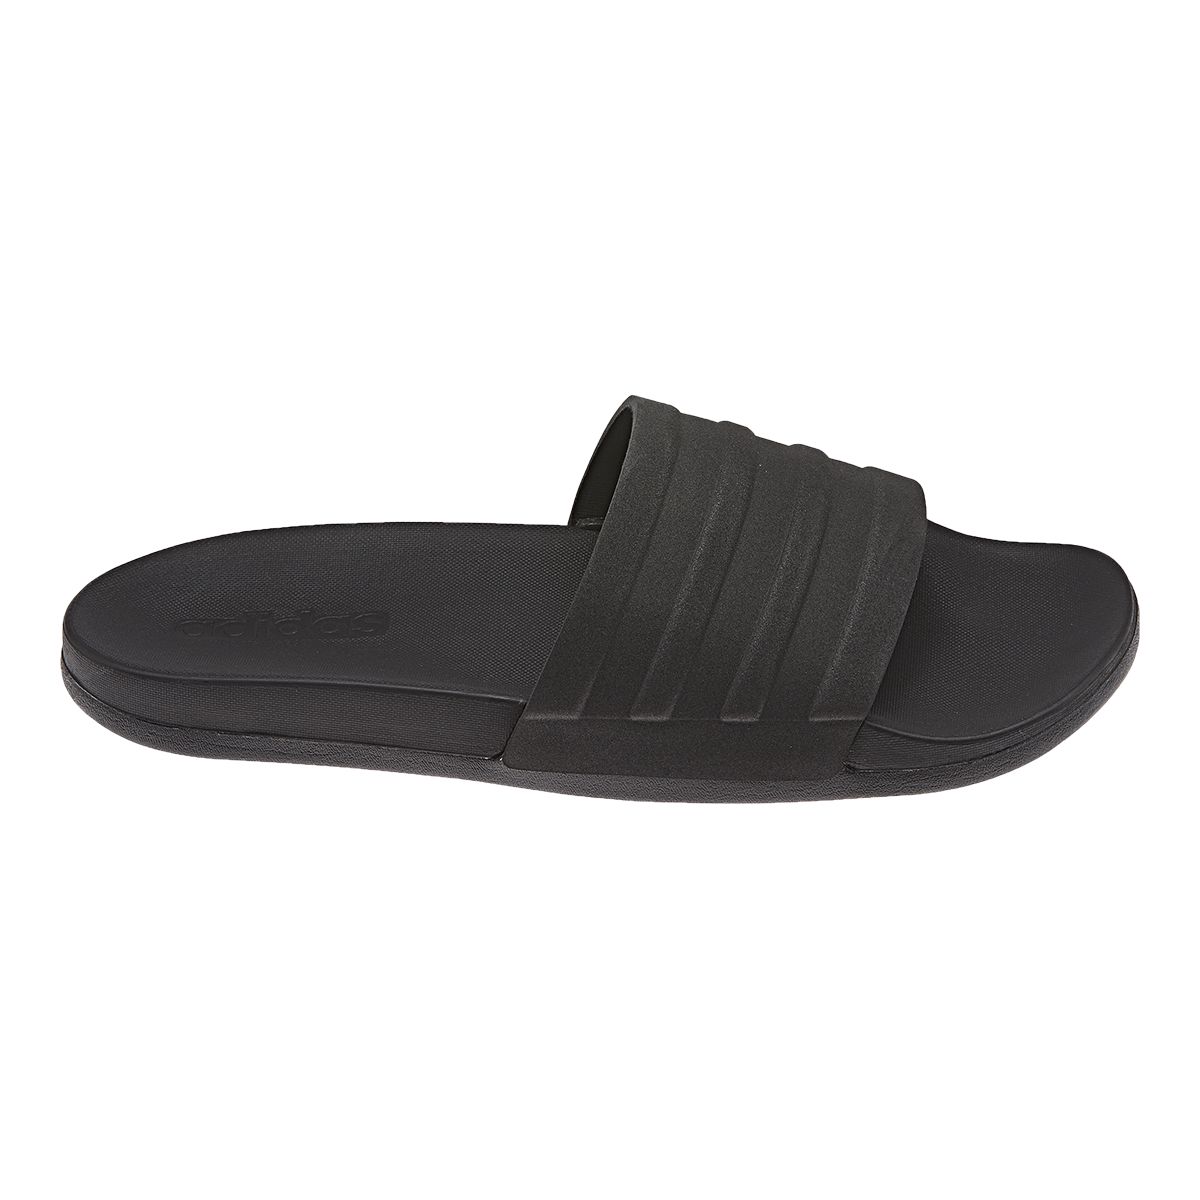 Adidas Unisex Adult Adilette Aqua Slide Sandals w/ Cloudfoam Footbed | eBay